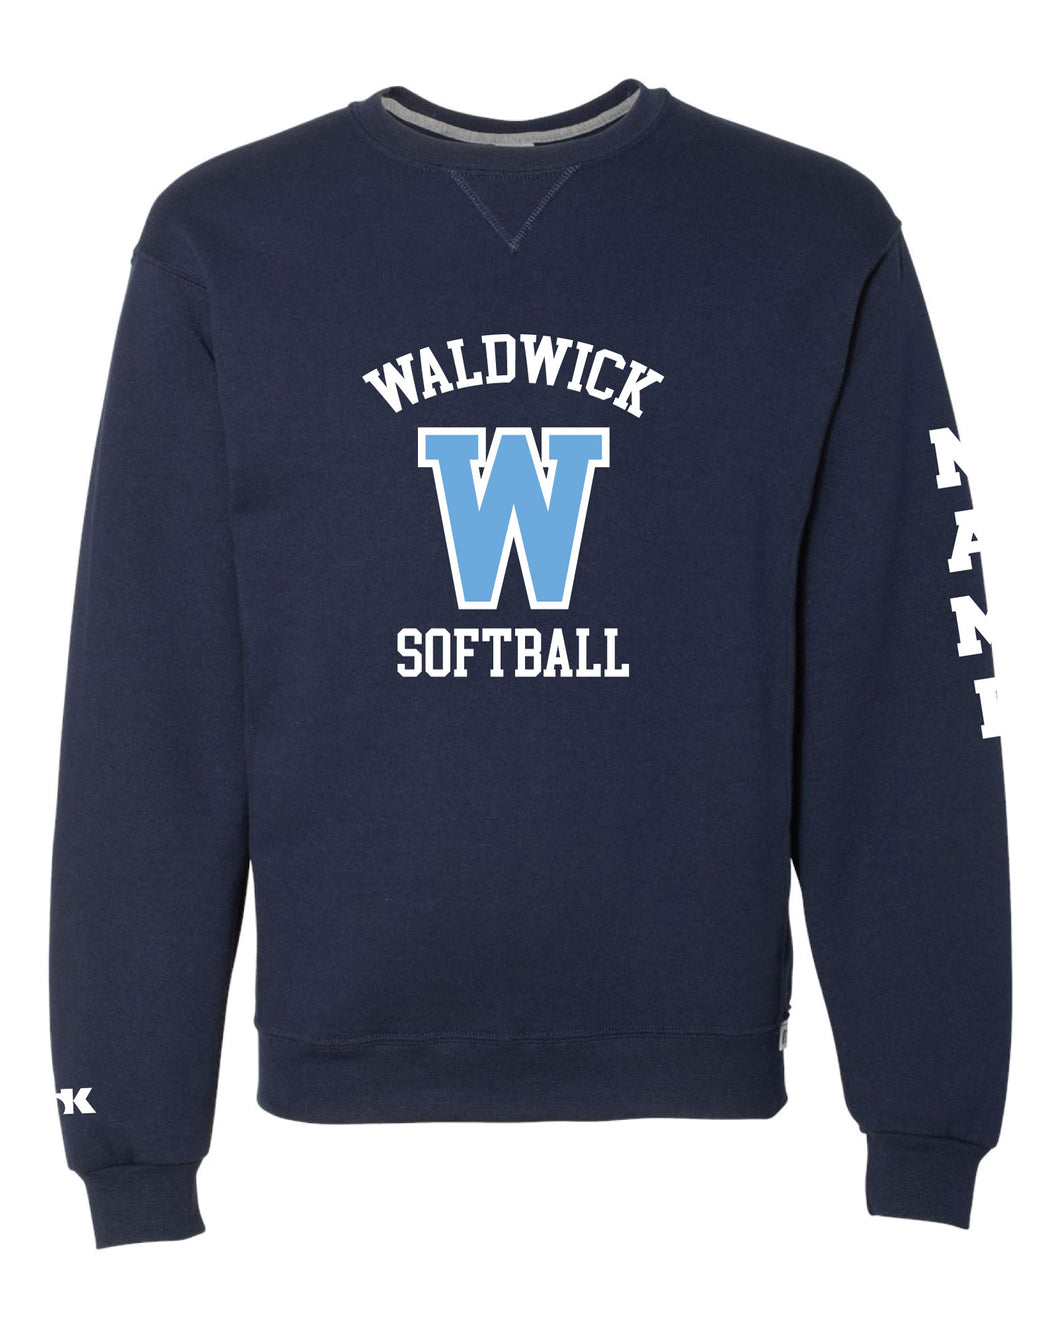 Waldwick Softball Russell Athletic Cotton Crewneck Sweatshirt - Navy